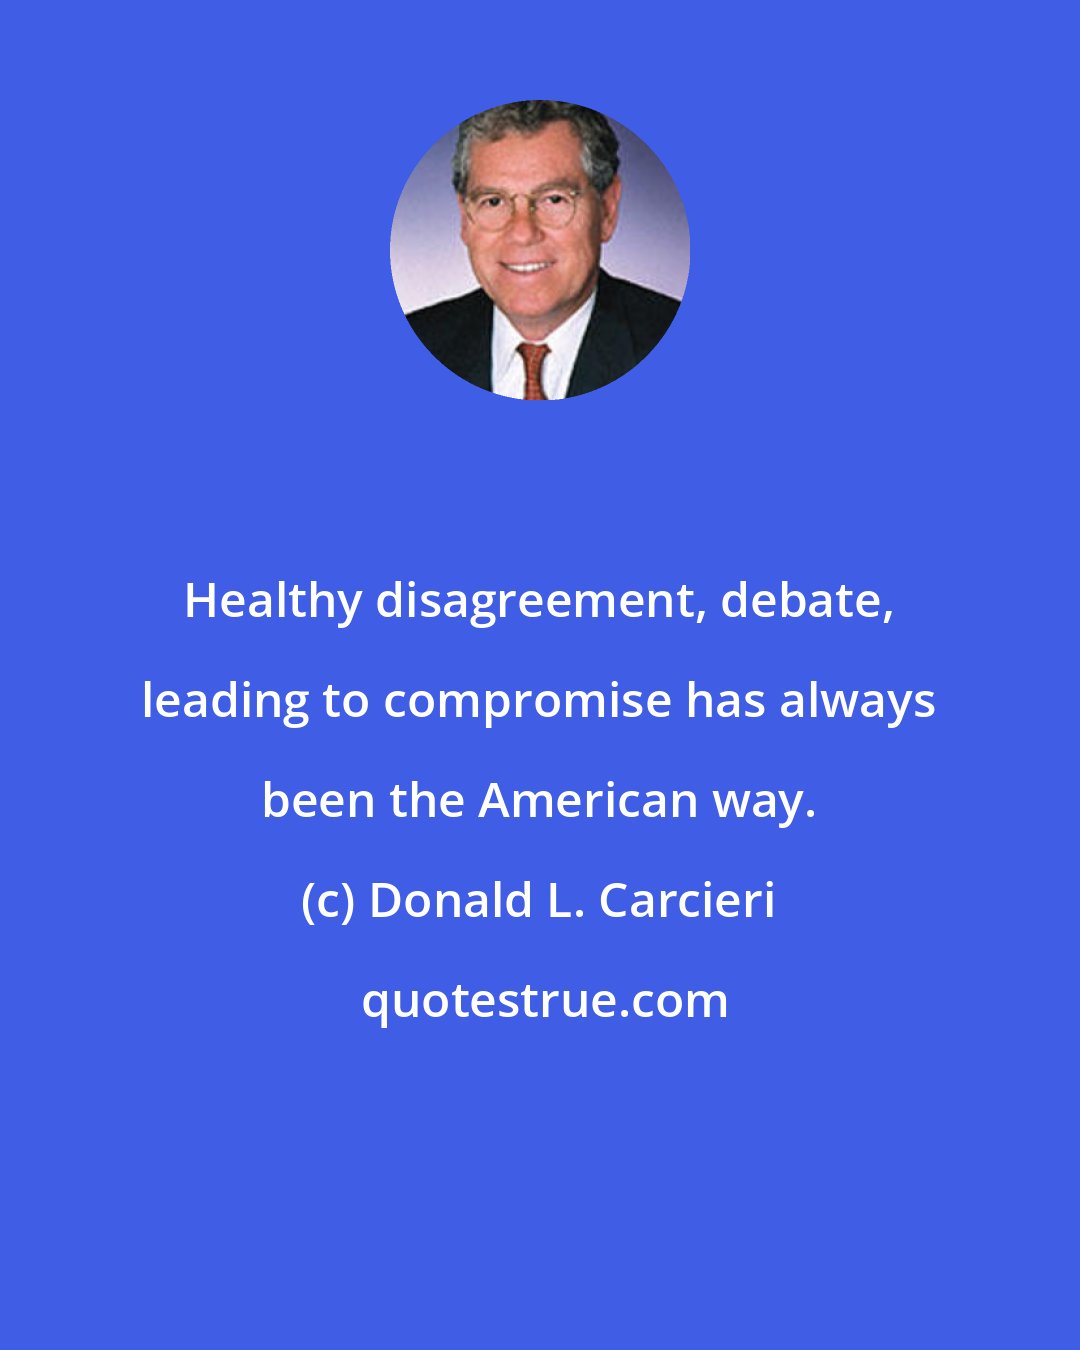 Donald L. Carcieri: Healthy disagreement, debate, leading to compromise has always been the American way.